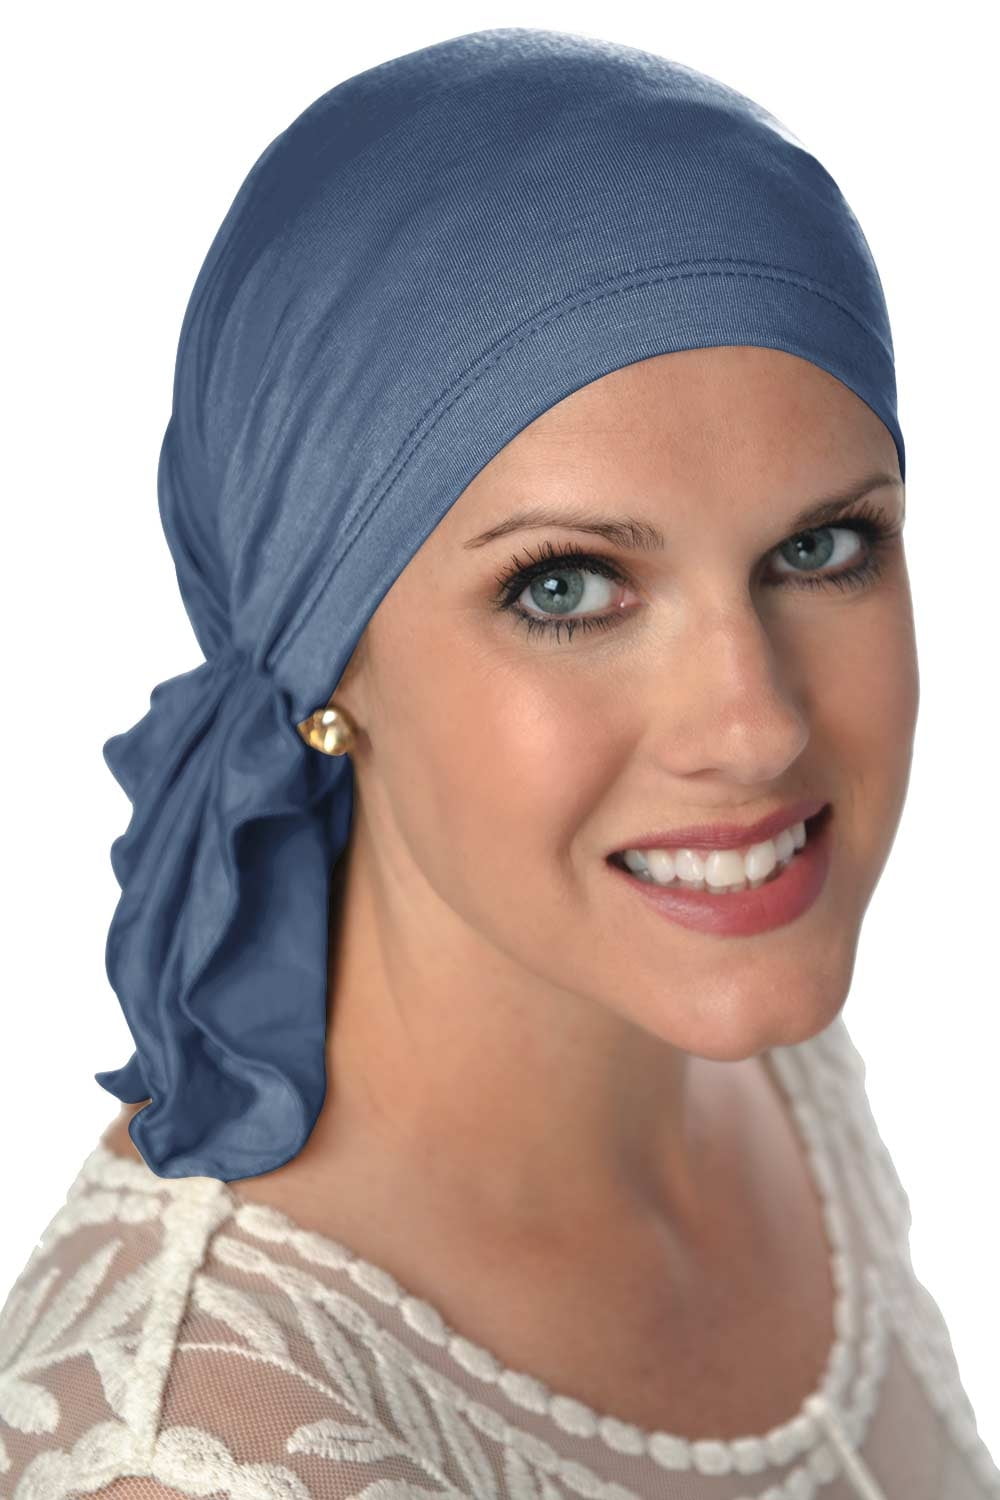 Various Scarf Slip On Pre Tied Turban Hat Chemo Cancer Headwear Beanie Cap Women 